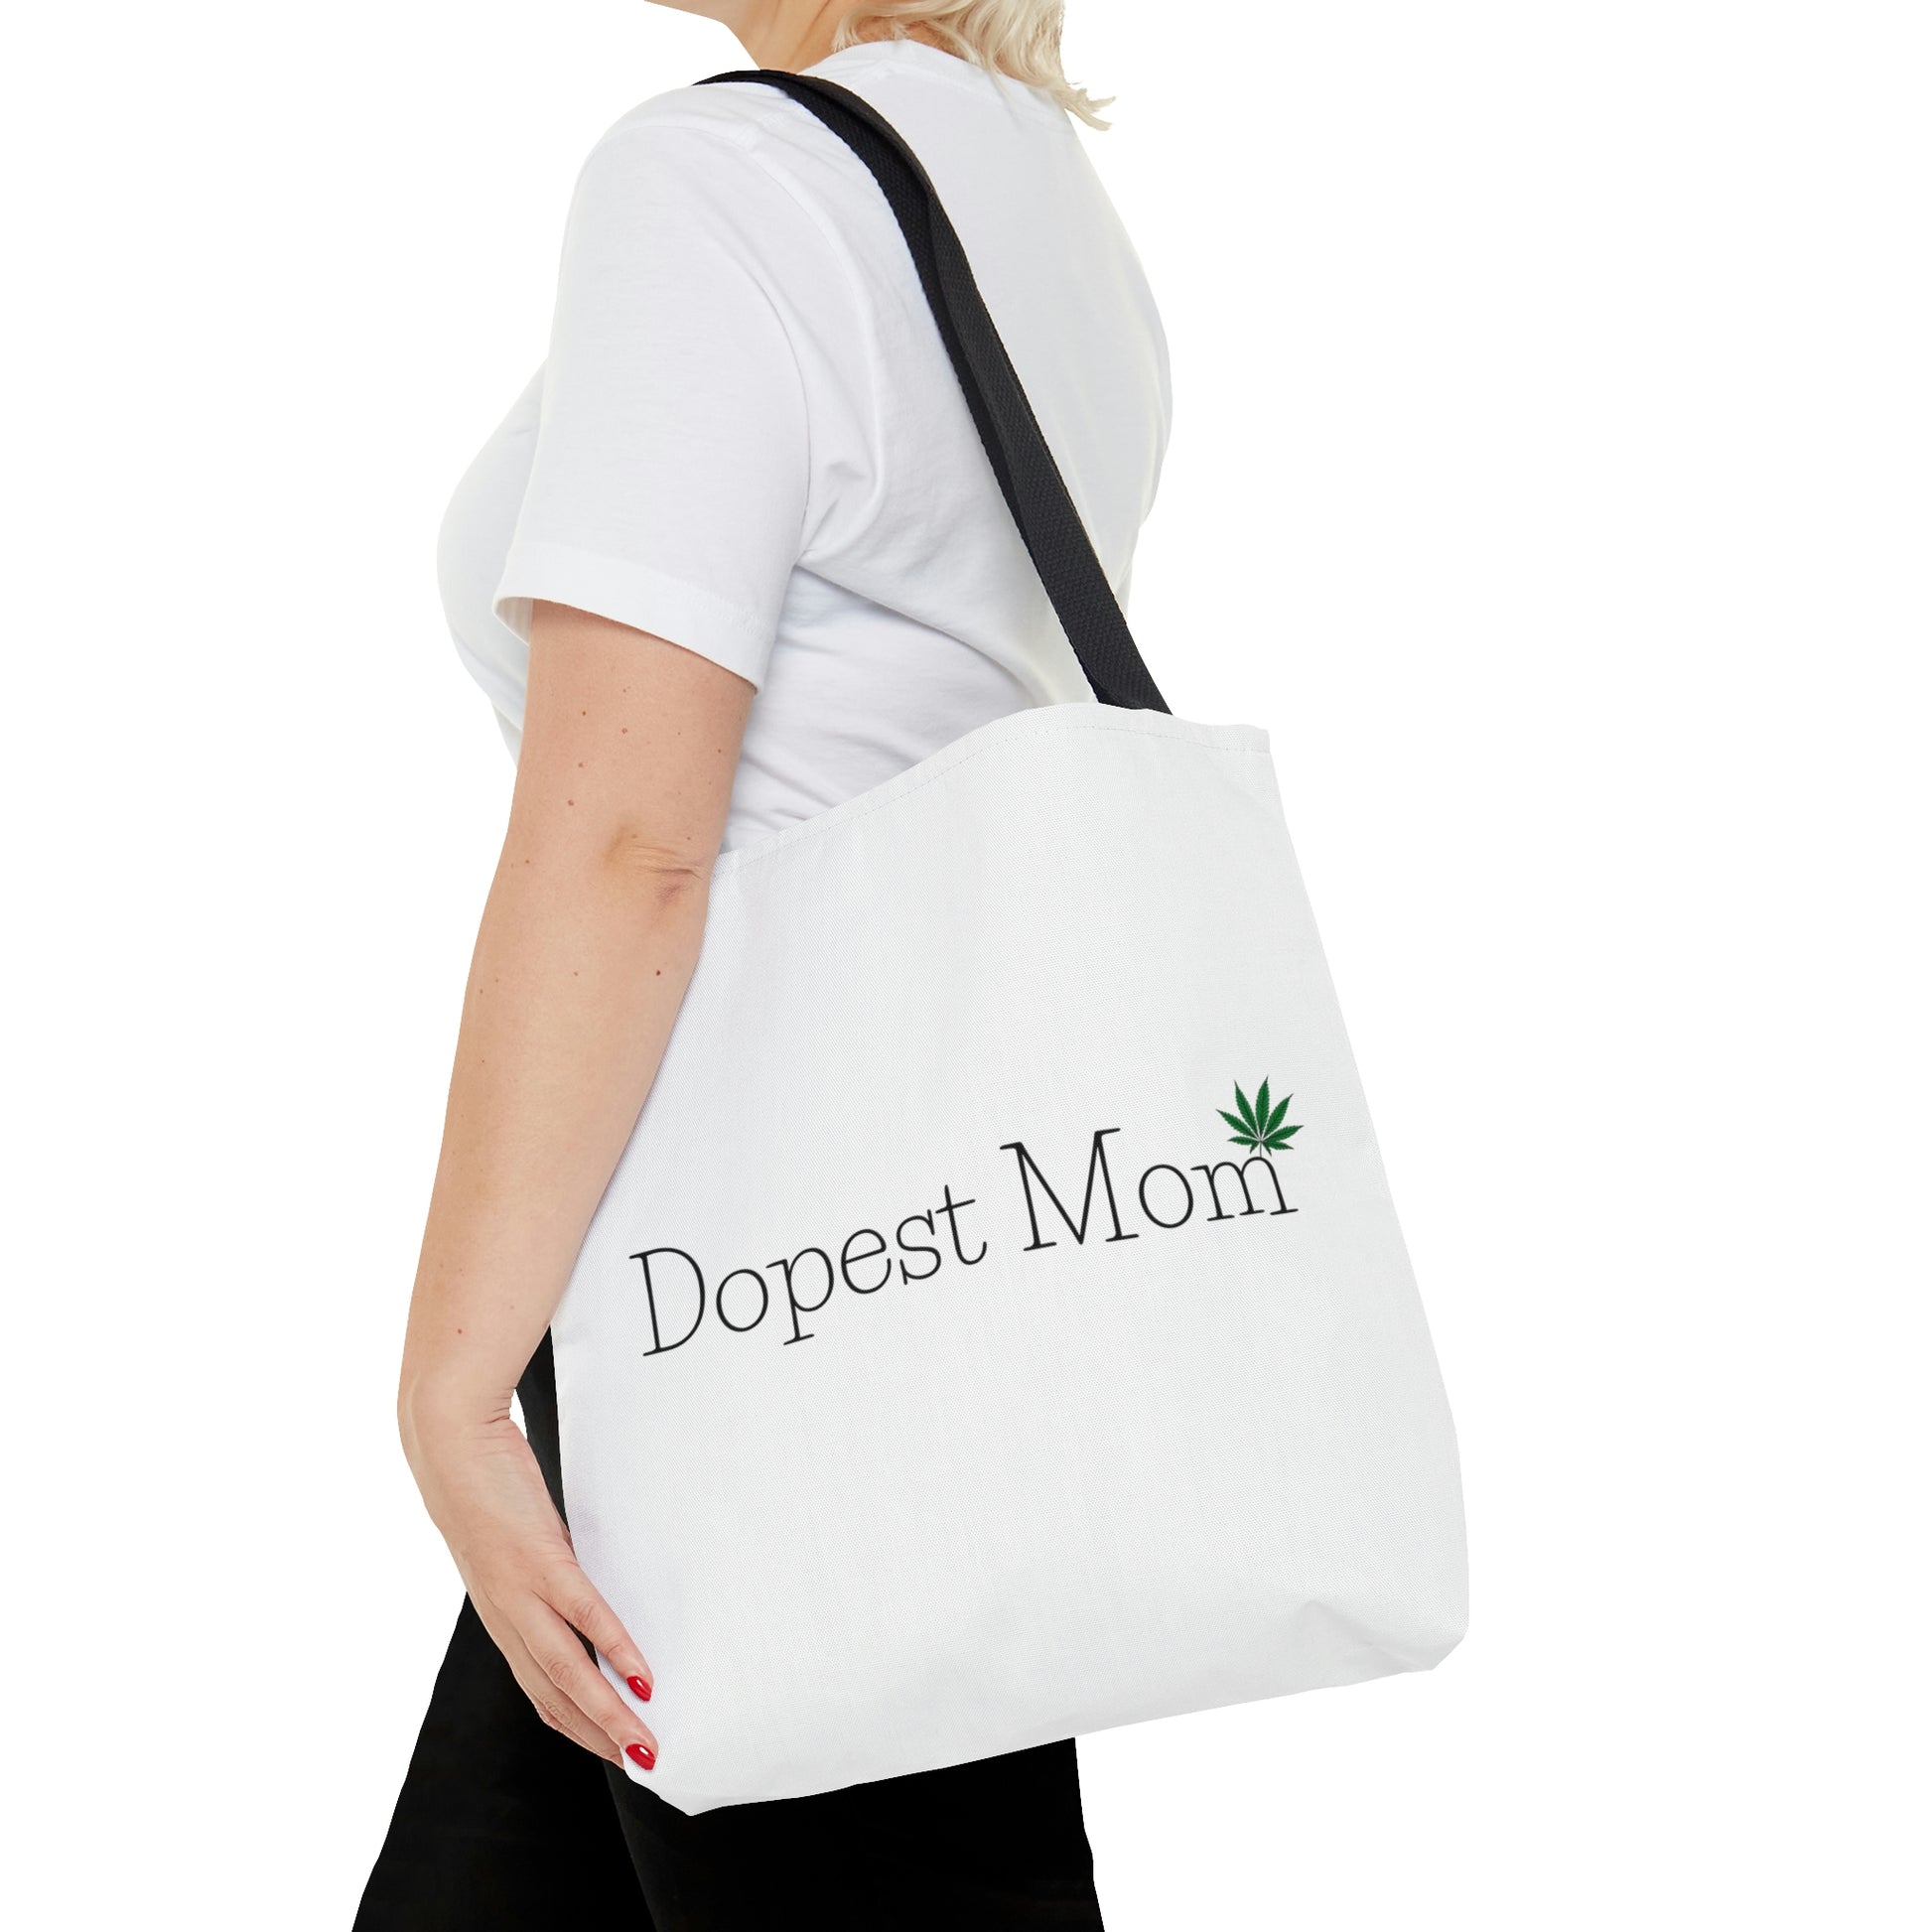 Dopest Mom Weed Tote Bag.